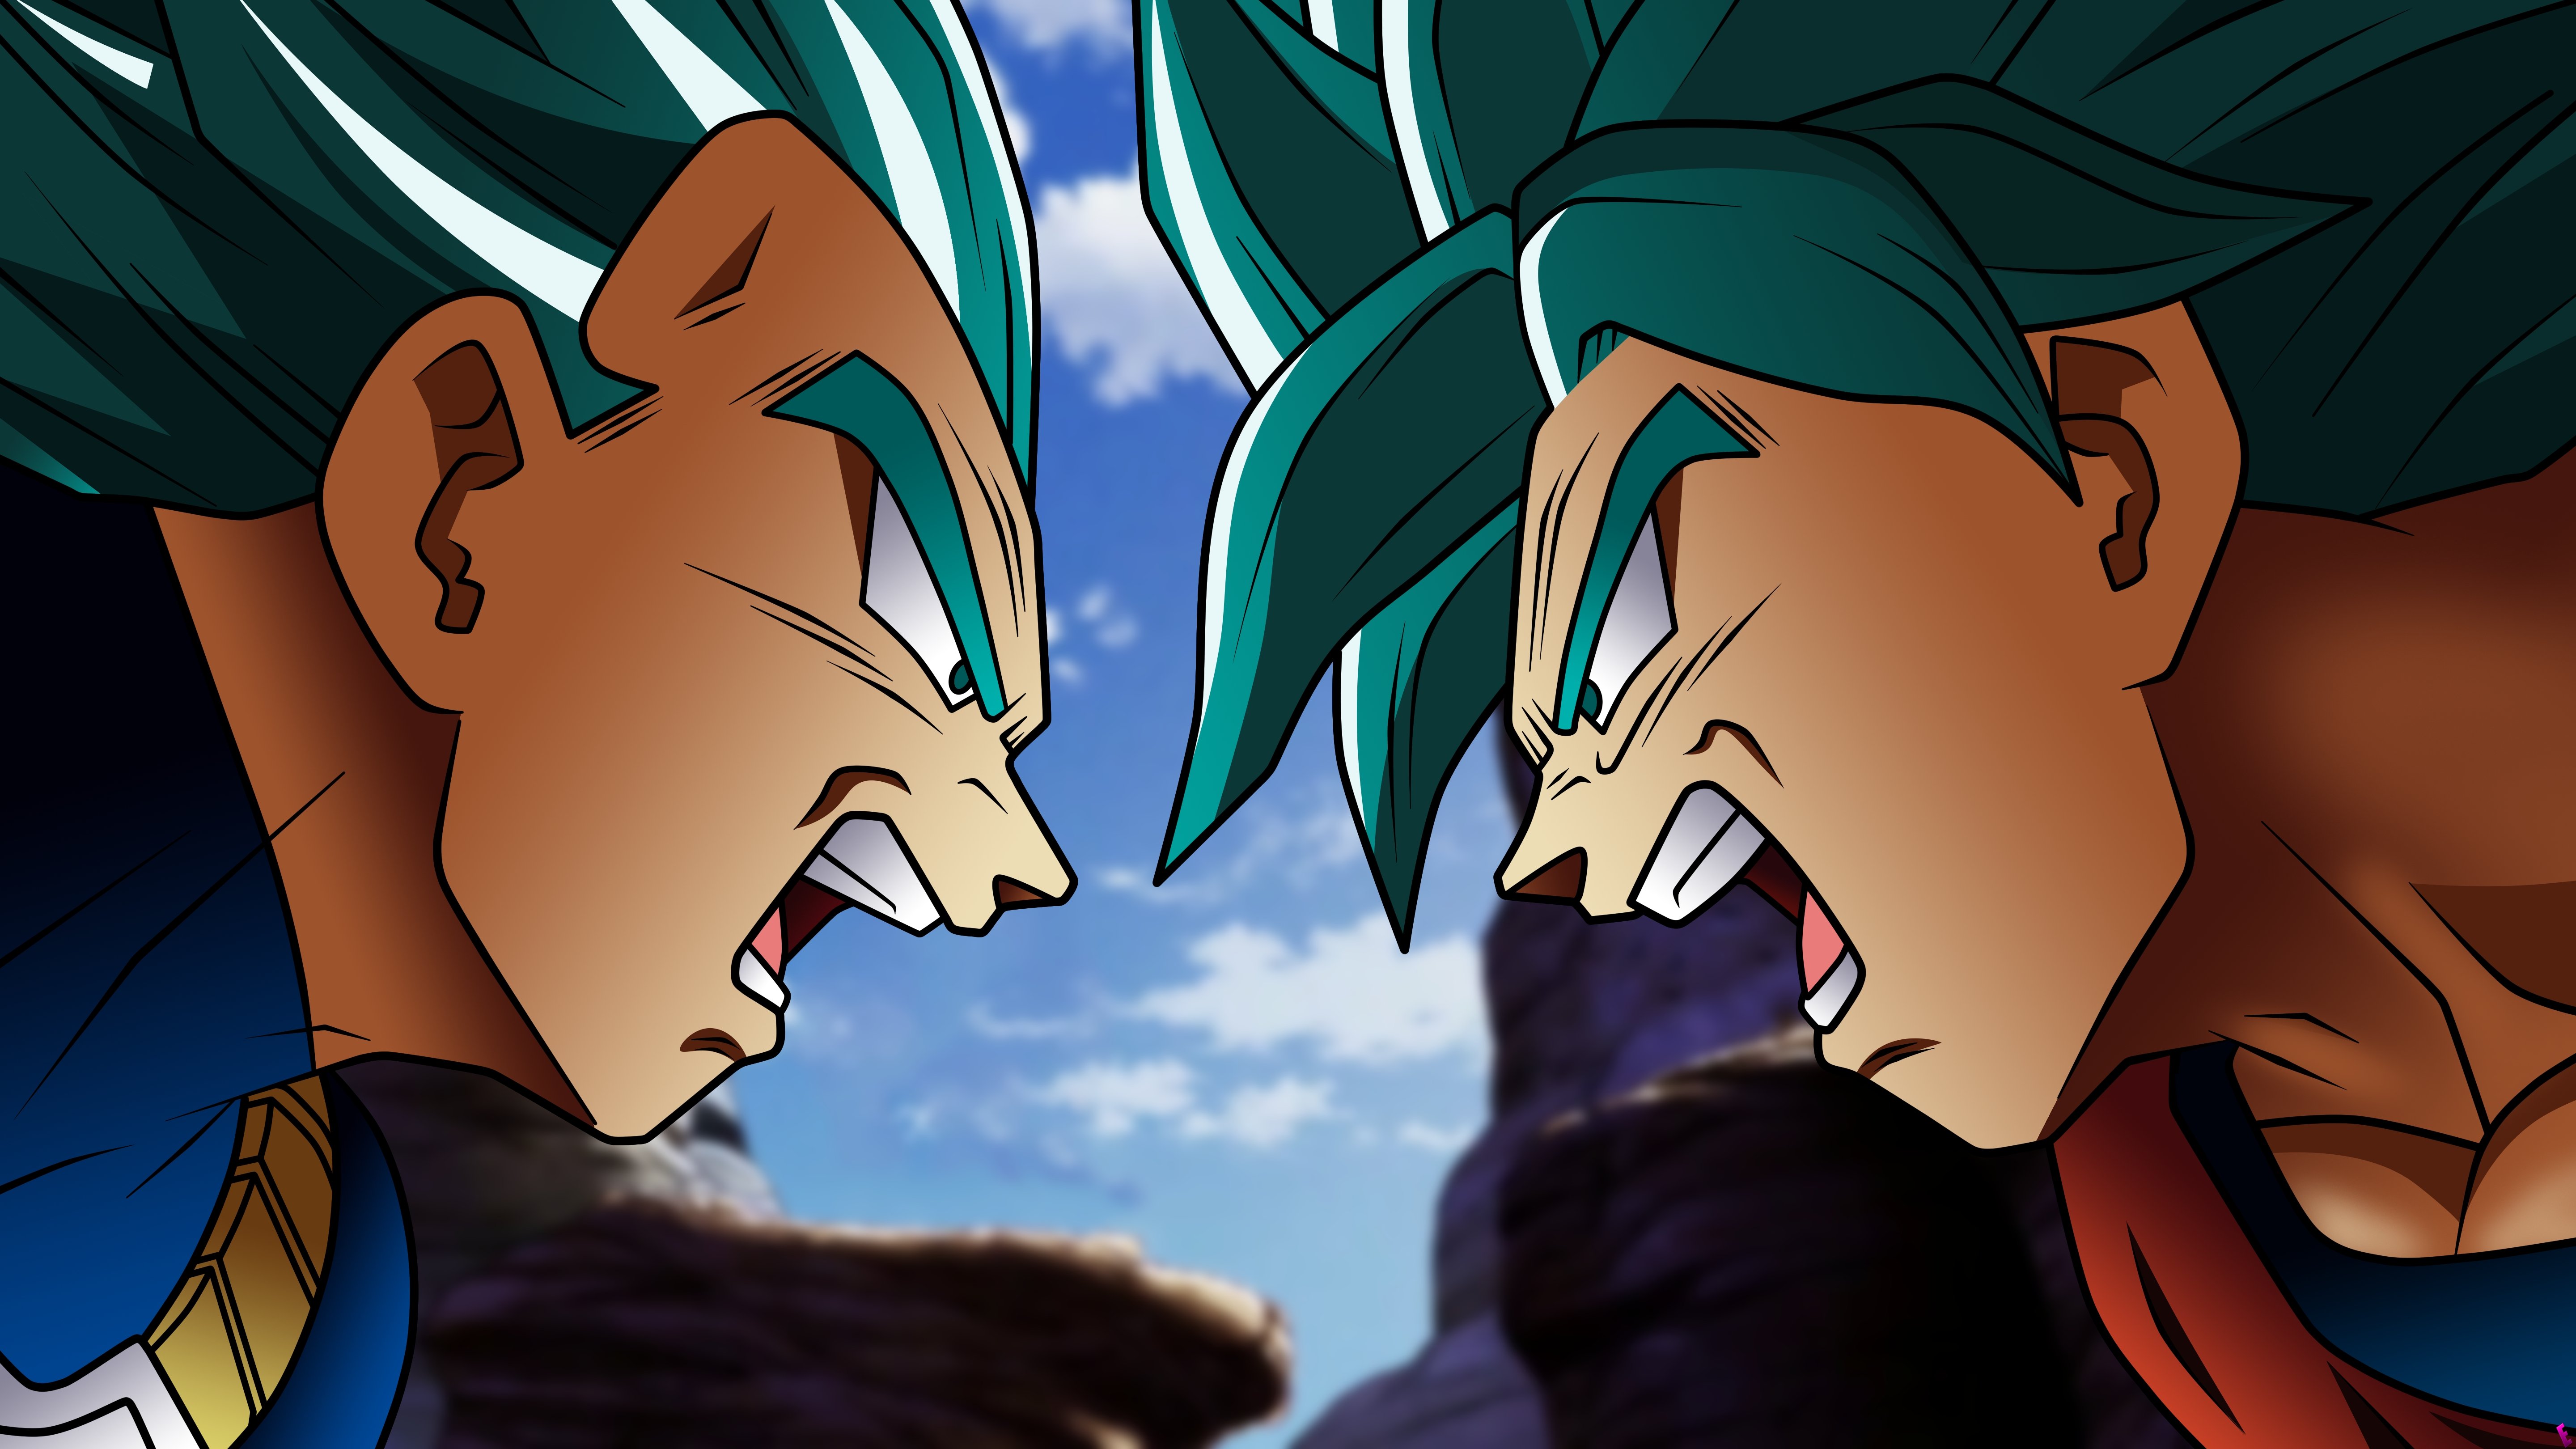 Vegeta Vs Goku From Dragon Ball Super Anime Wallpaper Id4990 8565